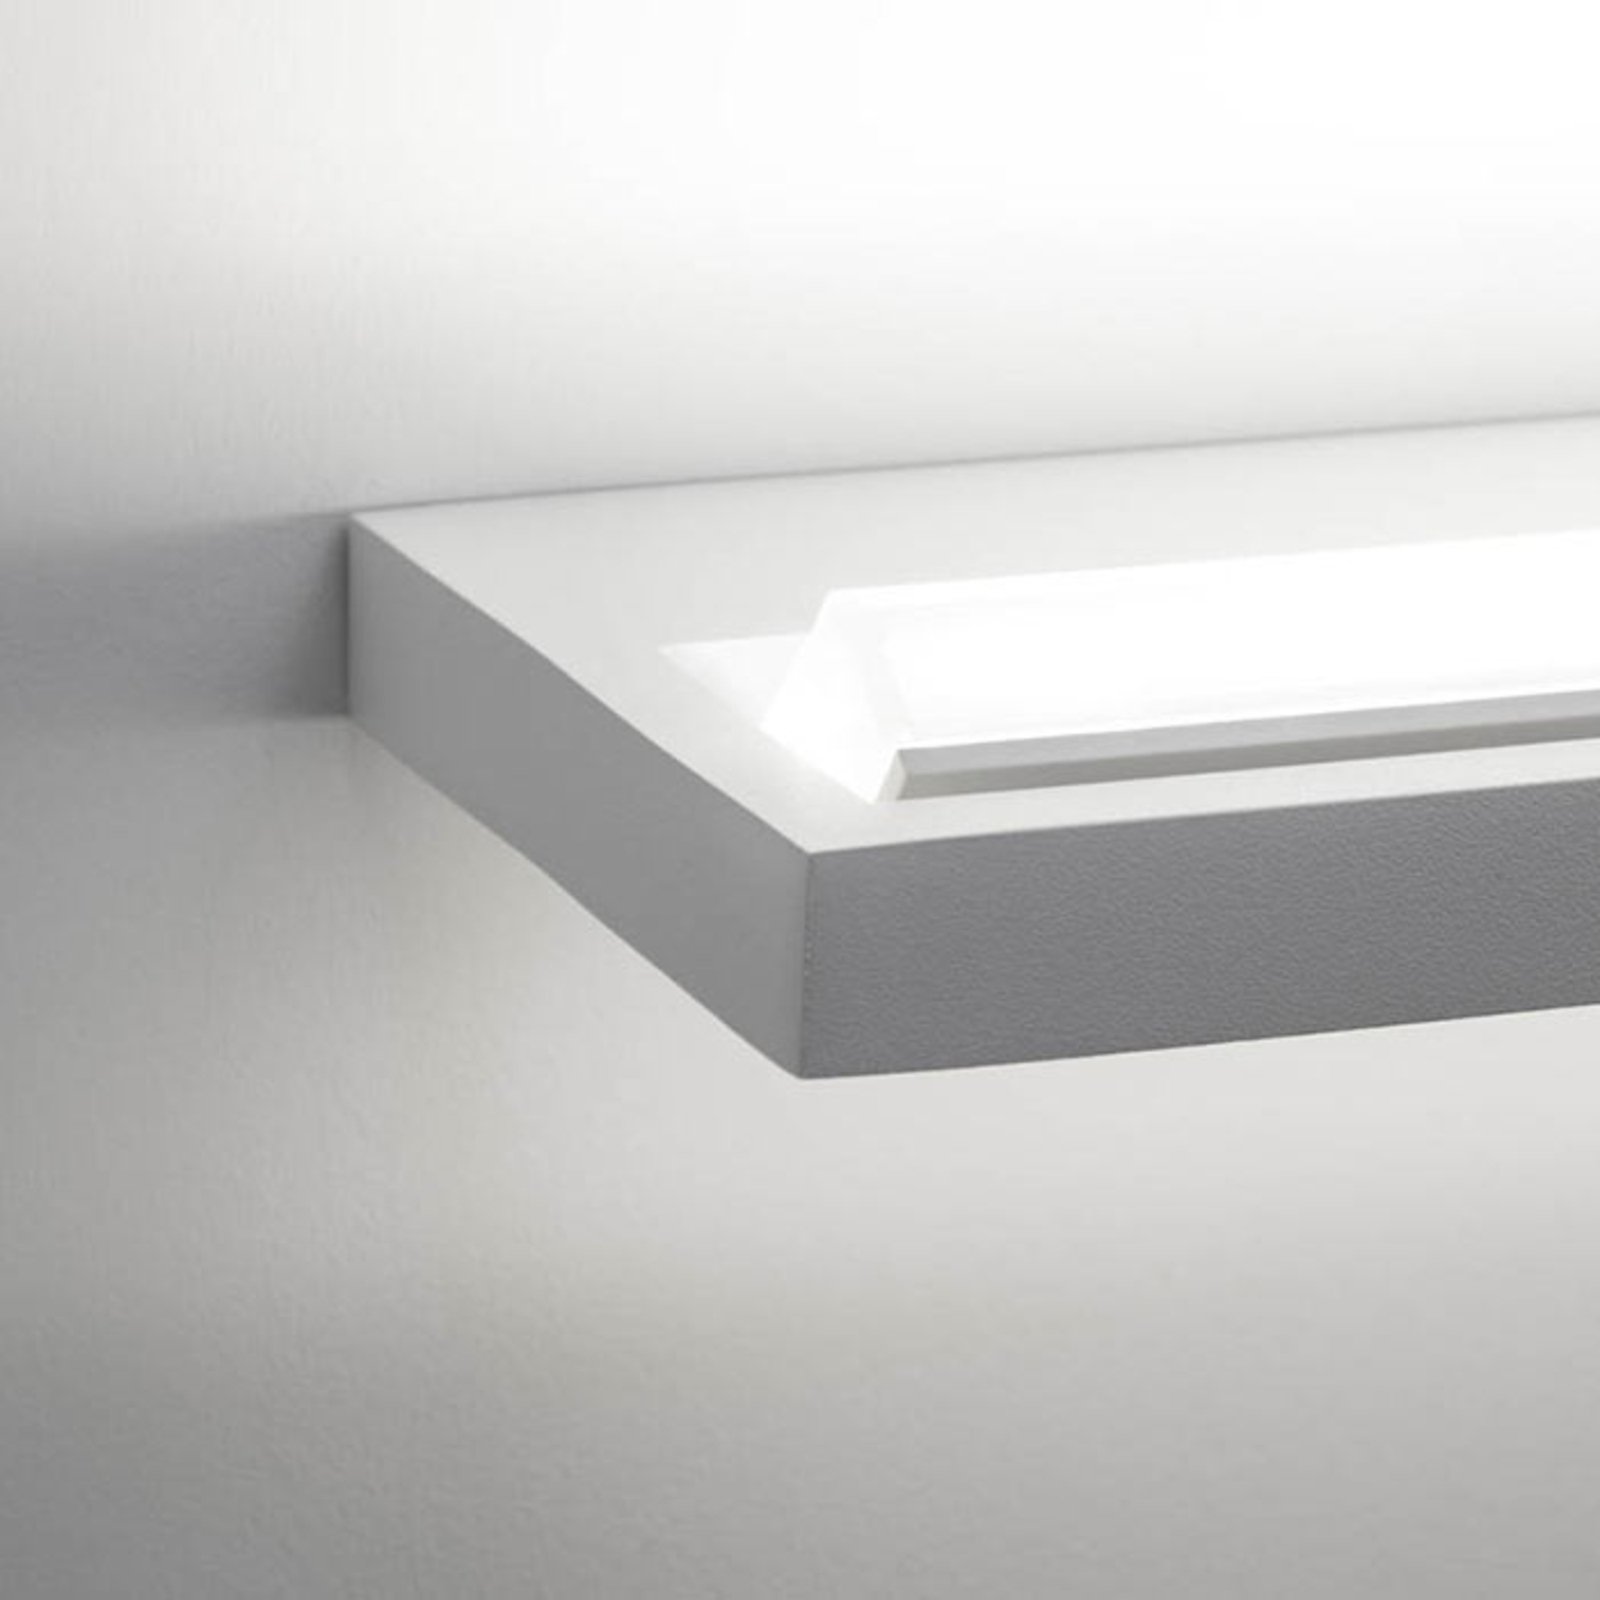 LED-Wandleuchte Tablet W1, Breite 66 cm, weiß